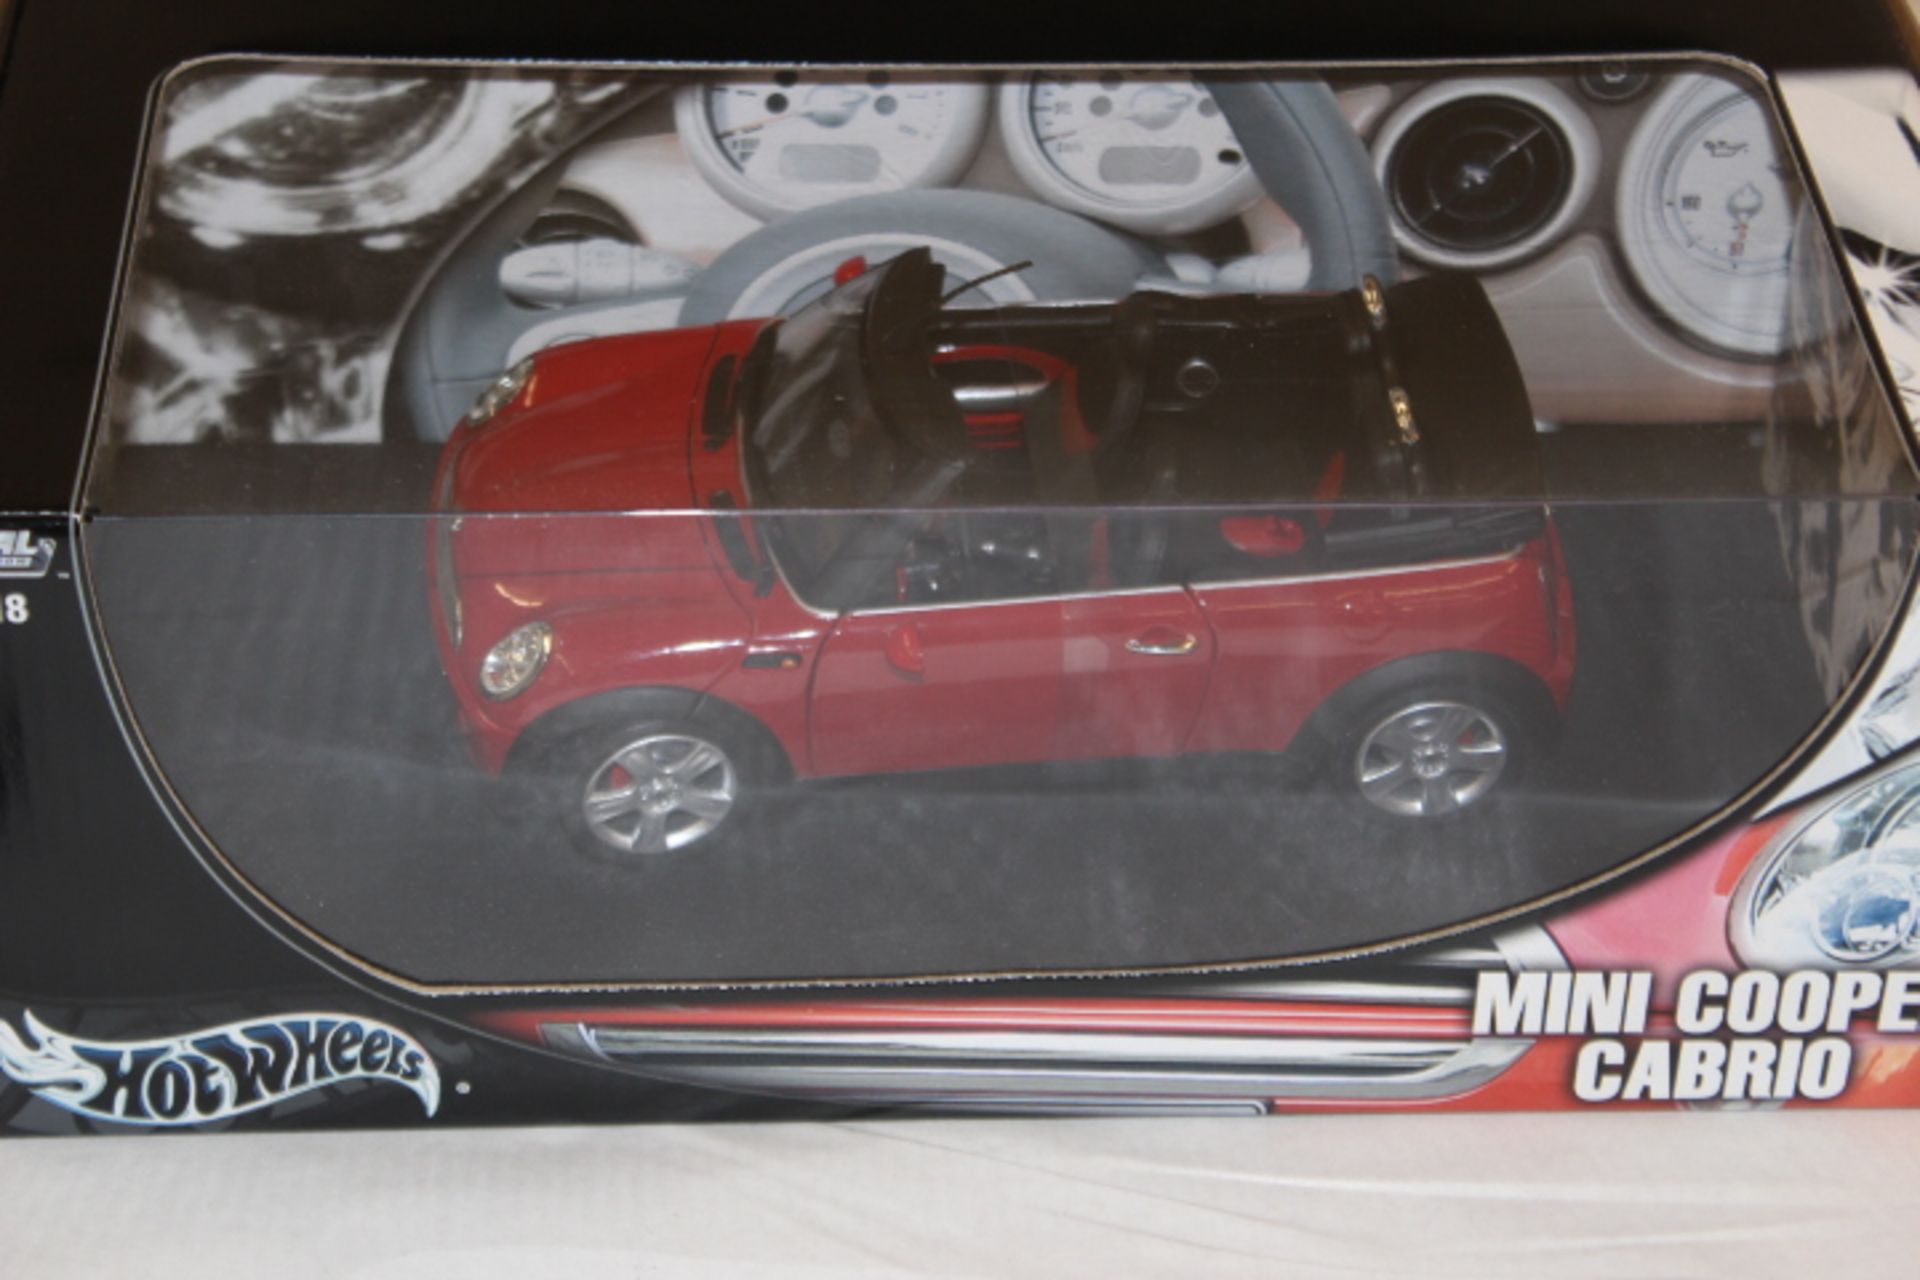 Hot Wheels Mini Cooper Cabrio die cast metal collection scale 1:18